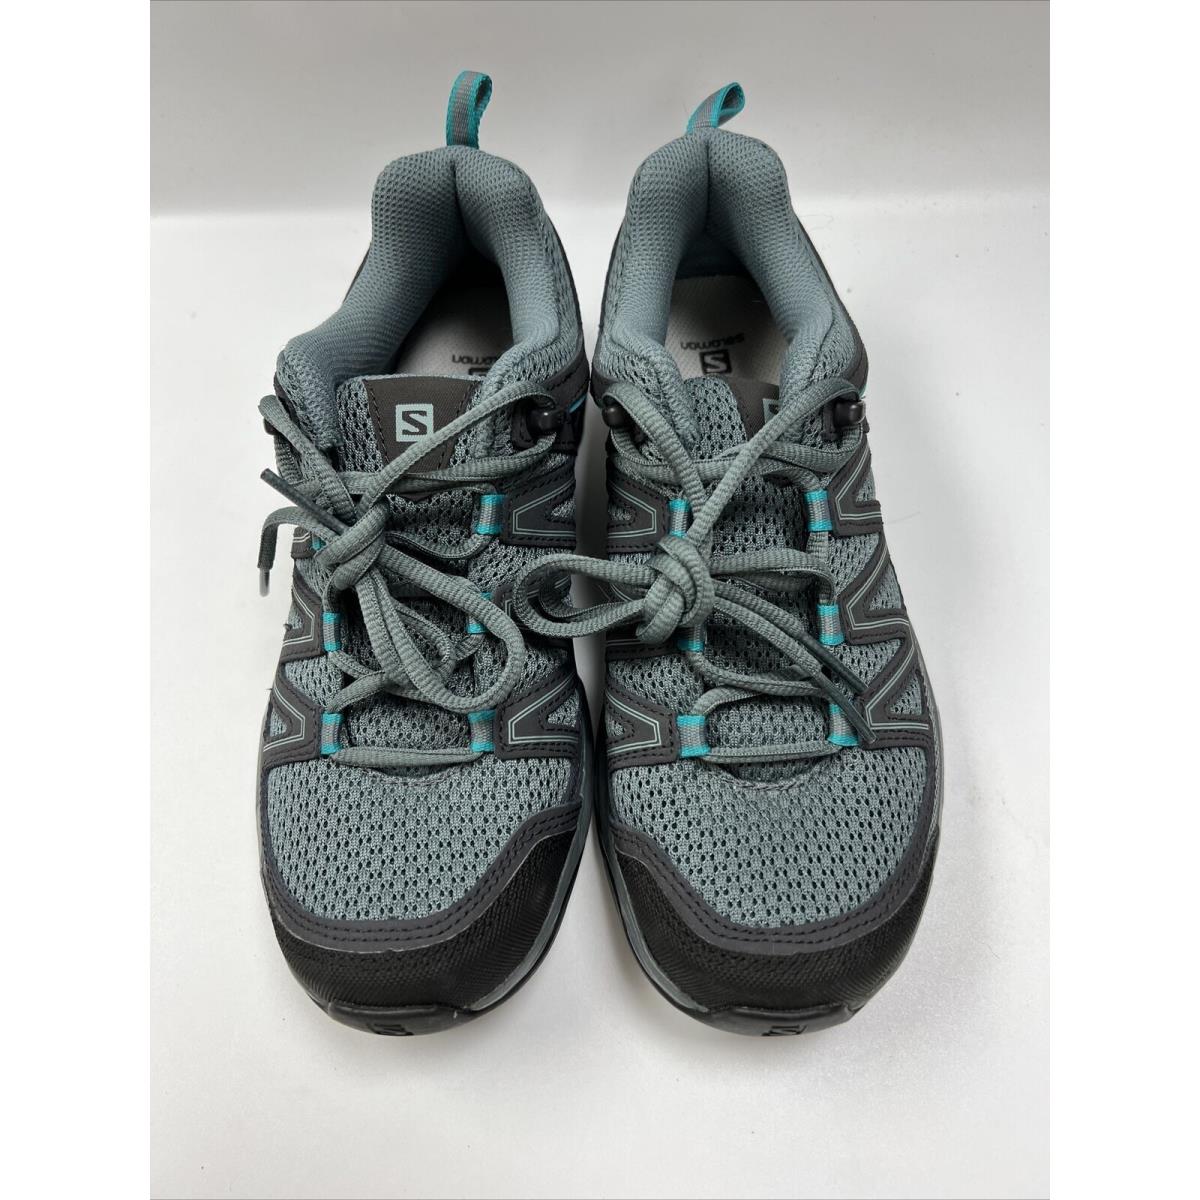 Salomon shoes Hiking - Gray 1